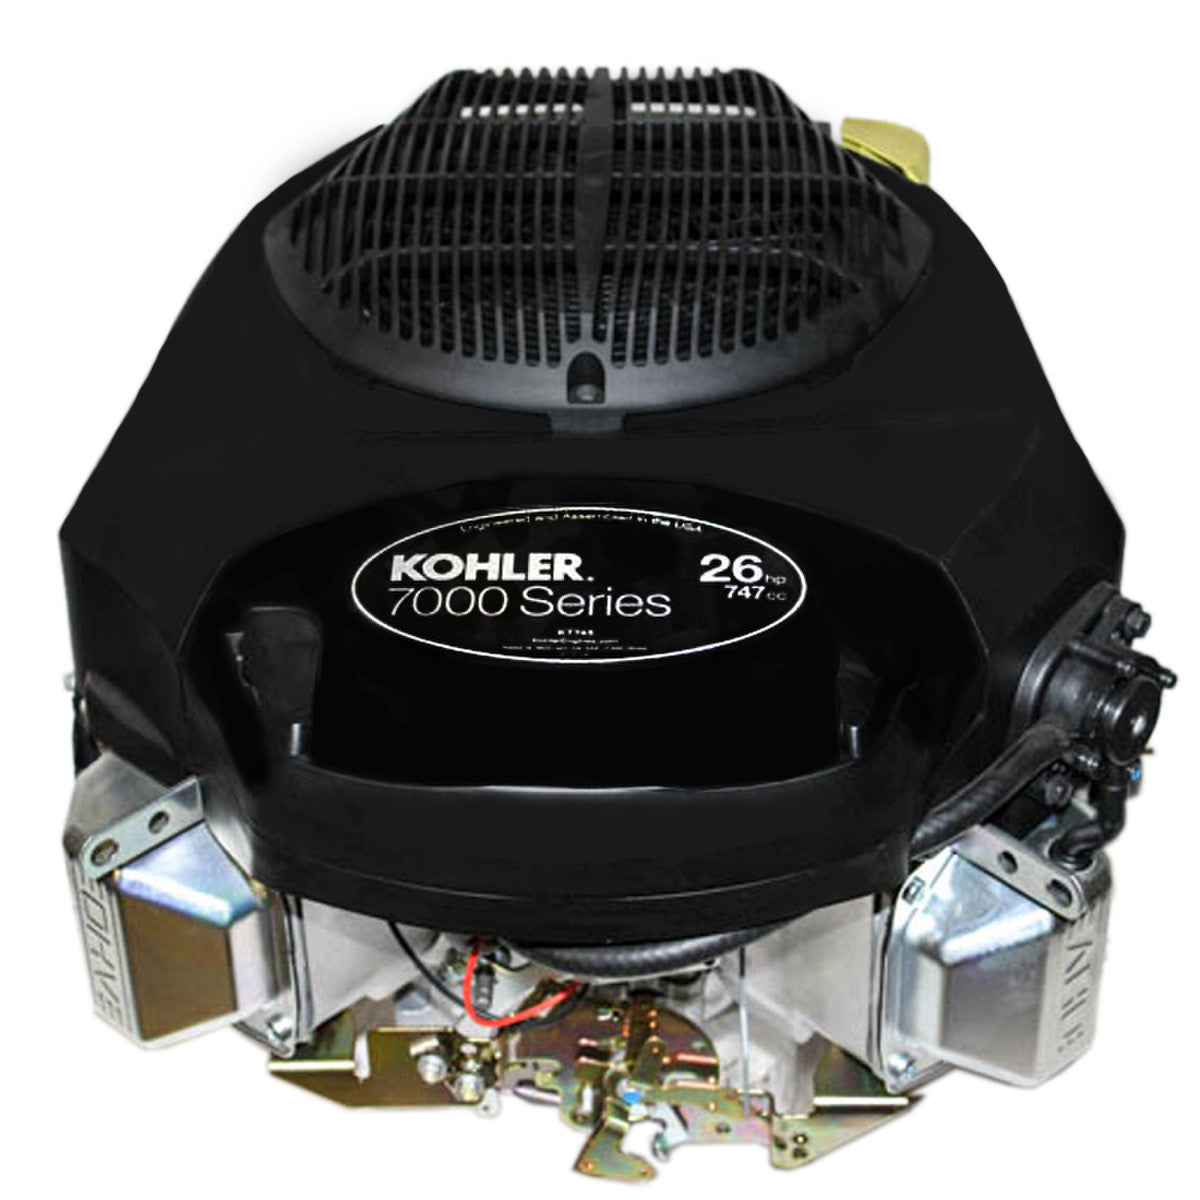 Kohler 7000 Series 26HP Replacement Engine #KT745-3082